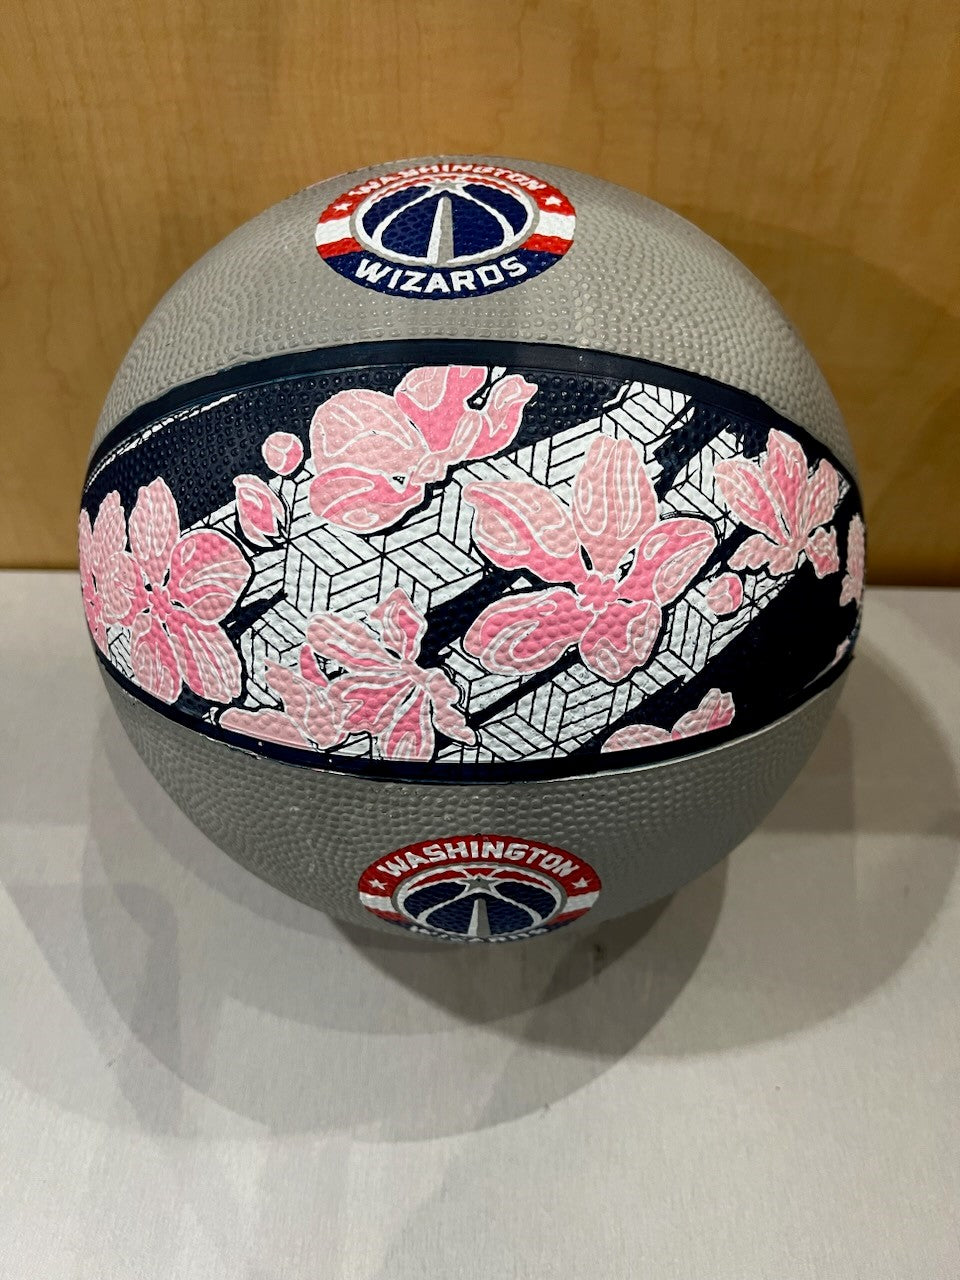 NEW!! 2022 Washington Wizards SGA Cherry Blossom Tote Bag SGA 12